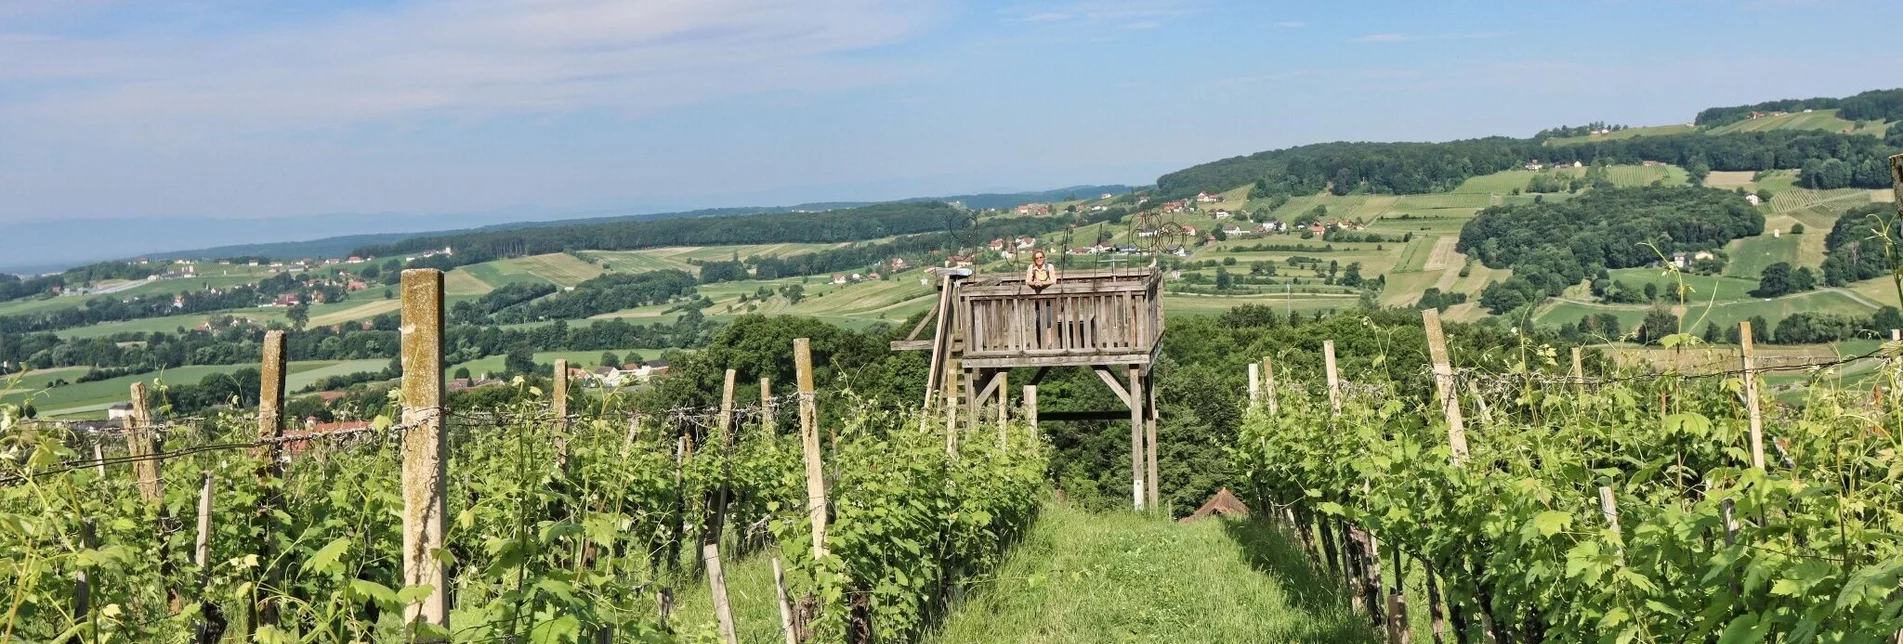 Hiking route TAU - path of the vineyards (TAU - Weg der Riede) - Touren-Impression #1 | © Weges OG